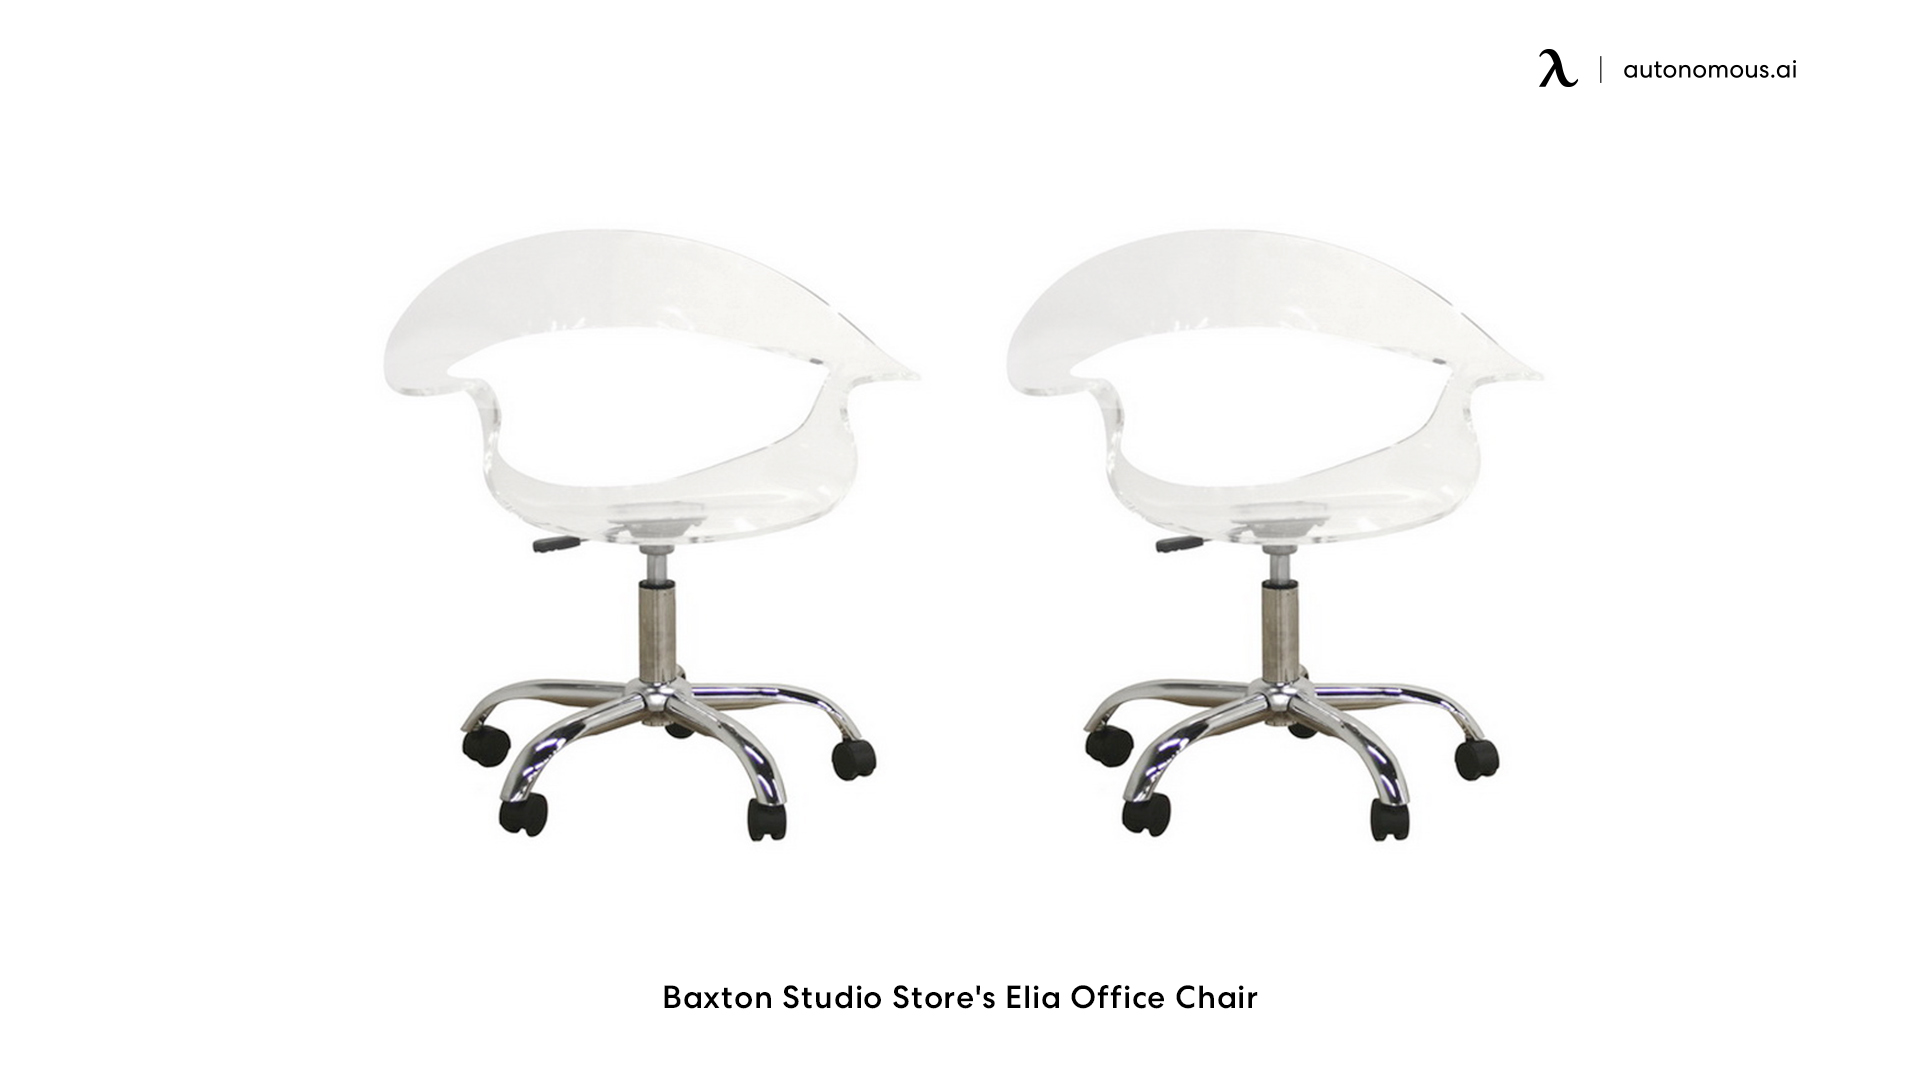 Baxton Studio Store's Elia aesthetic desk chair